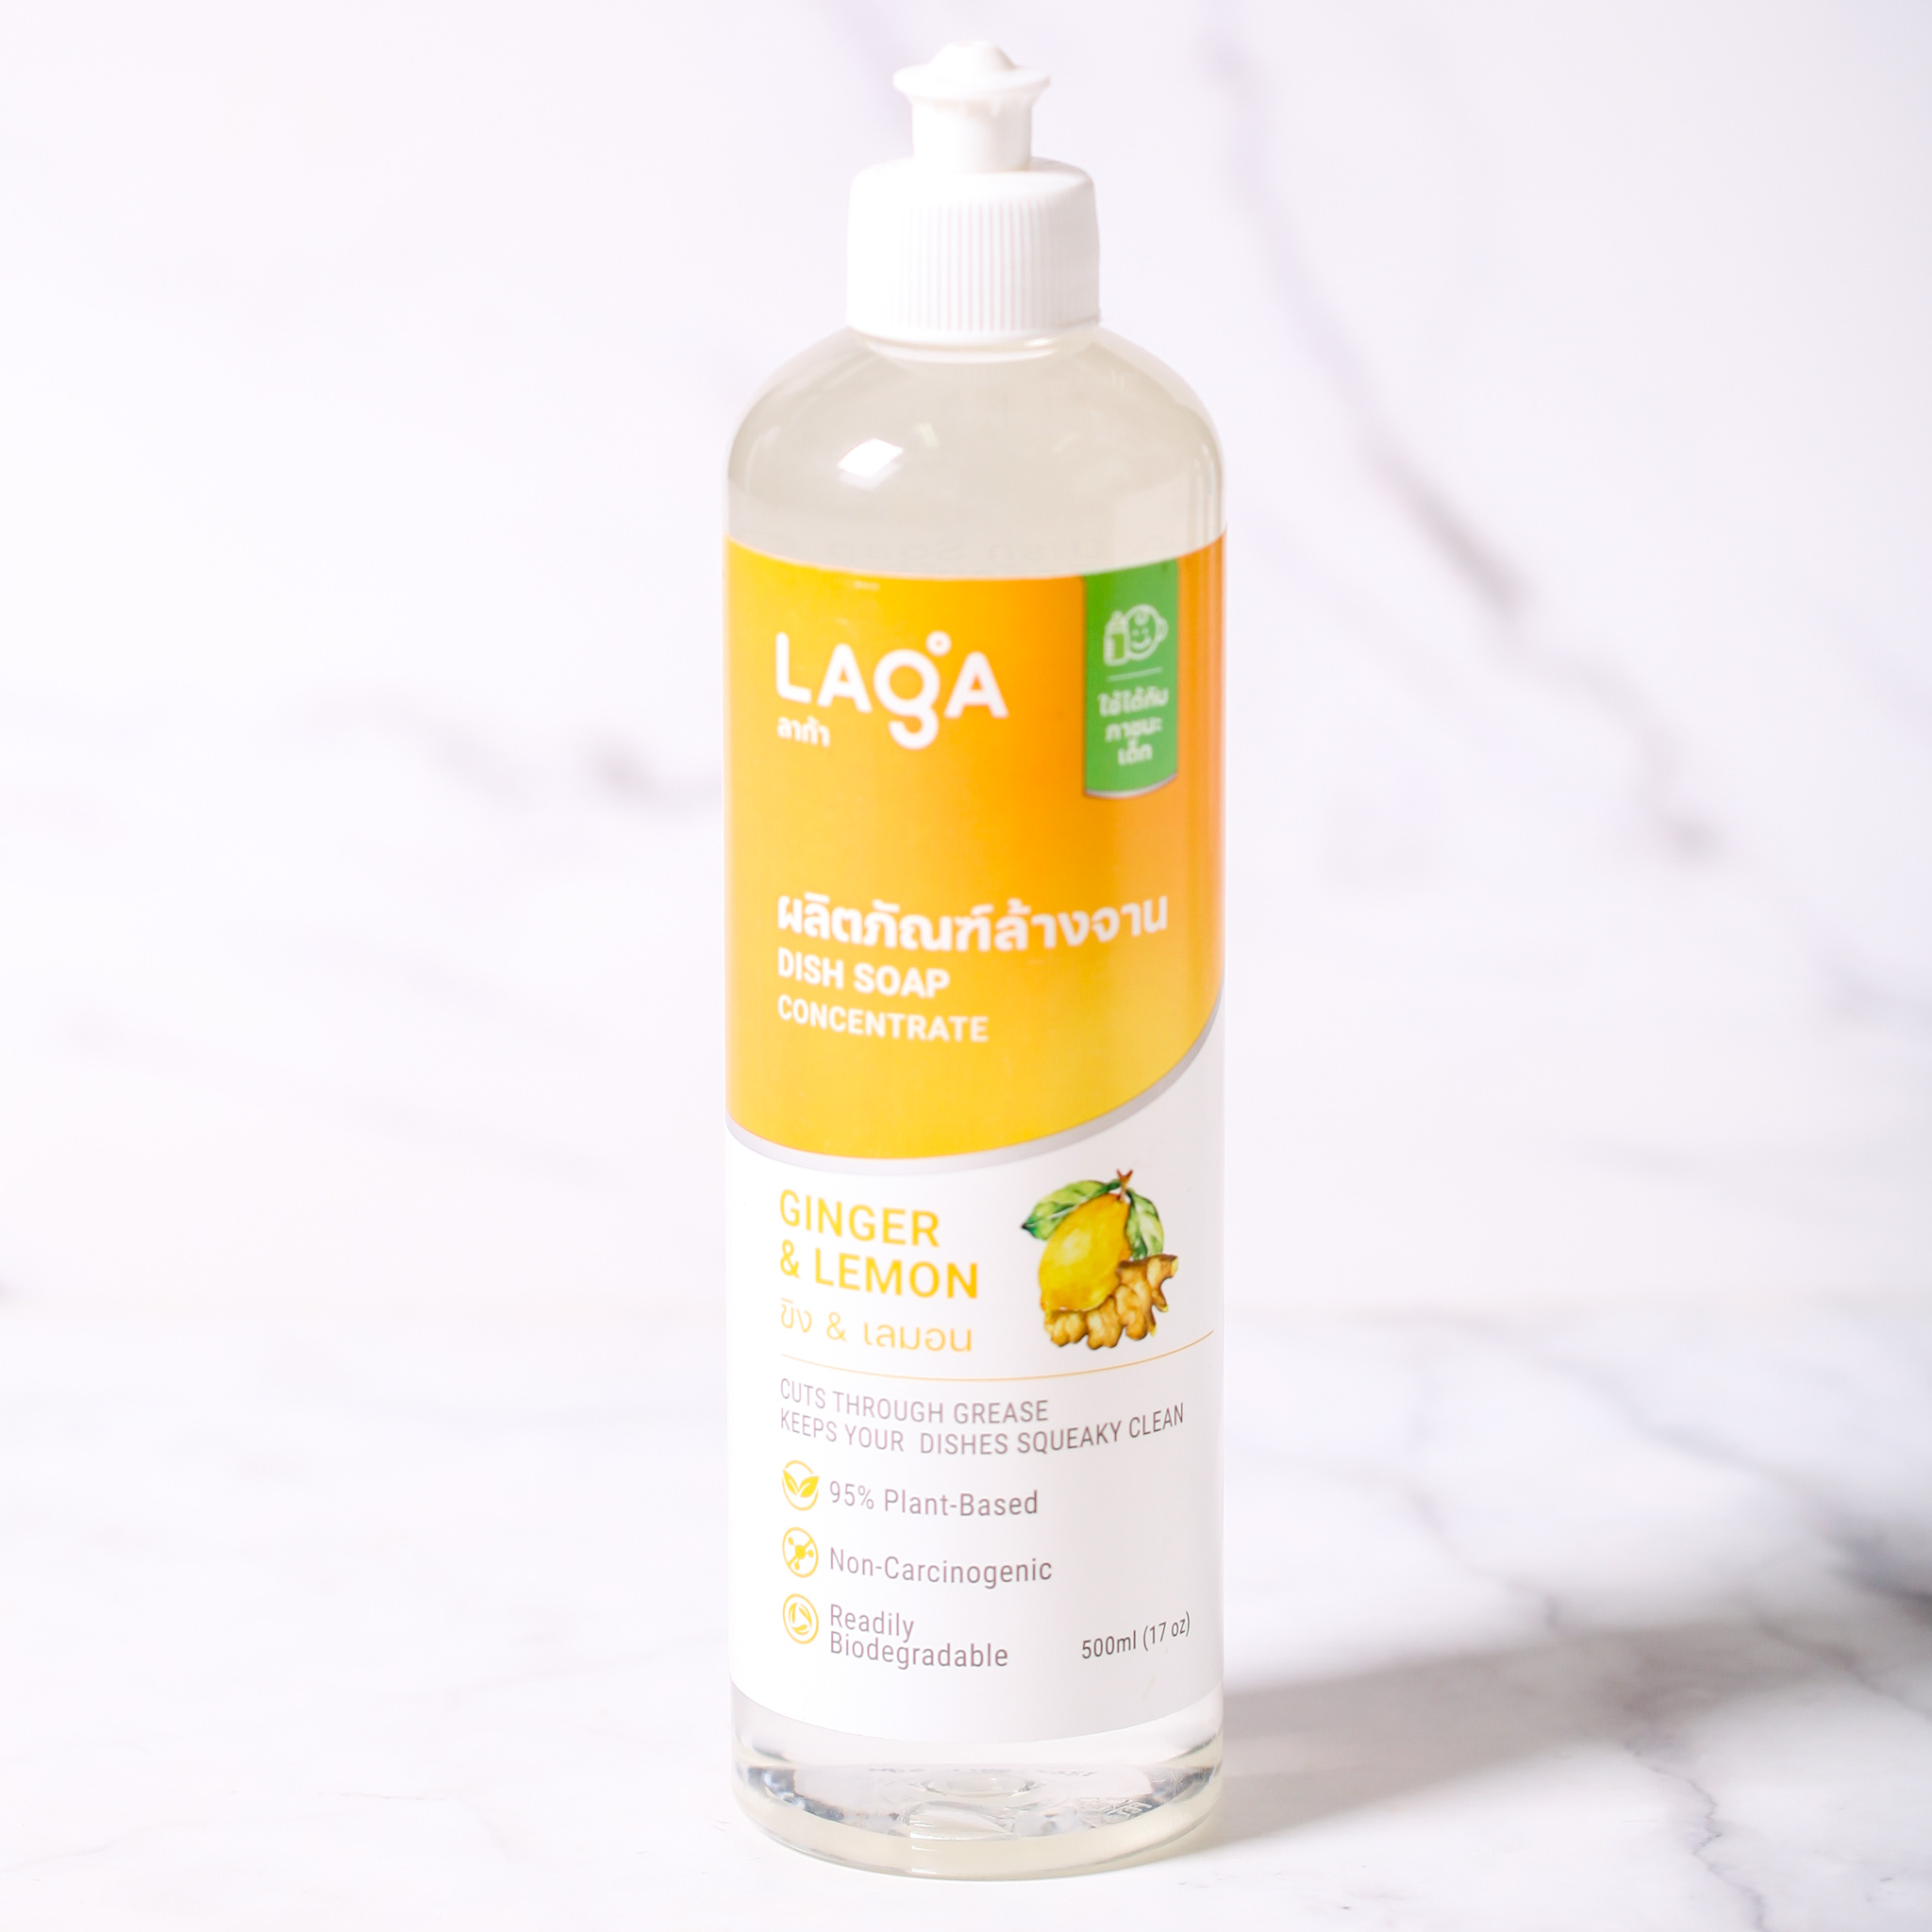 LAGA Natural Dish Soap Concentrate, Ginger & Lemon